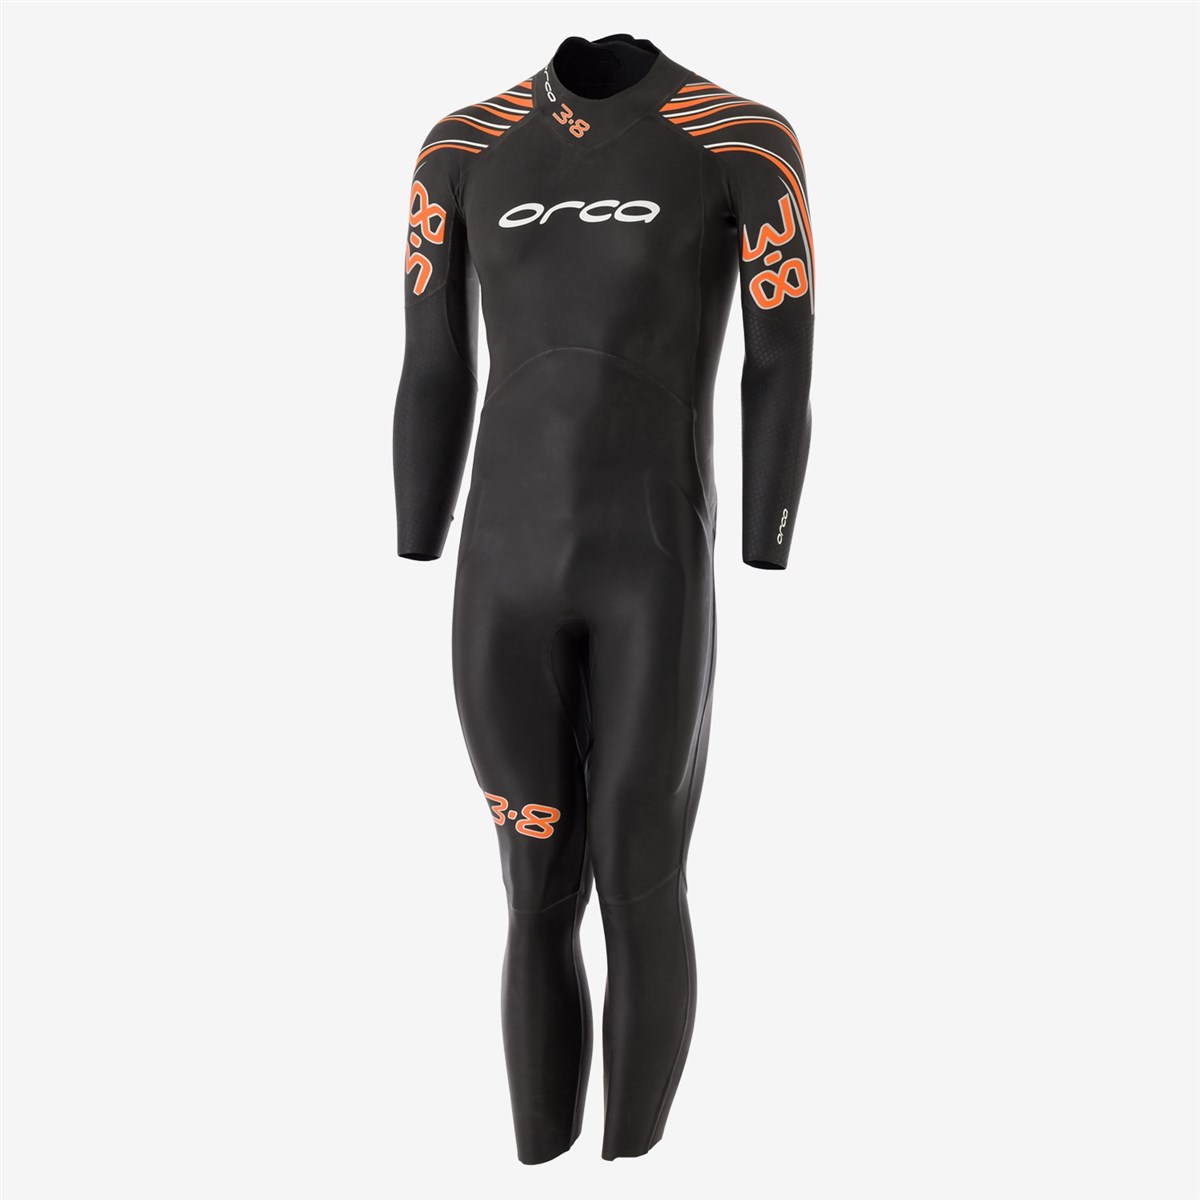 Orca 3.8 Full Sleeve Wetsuit product image